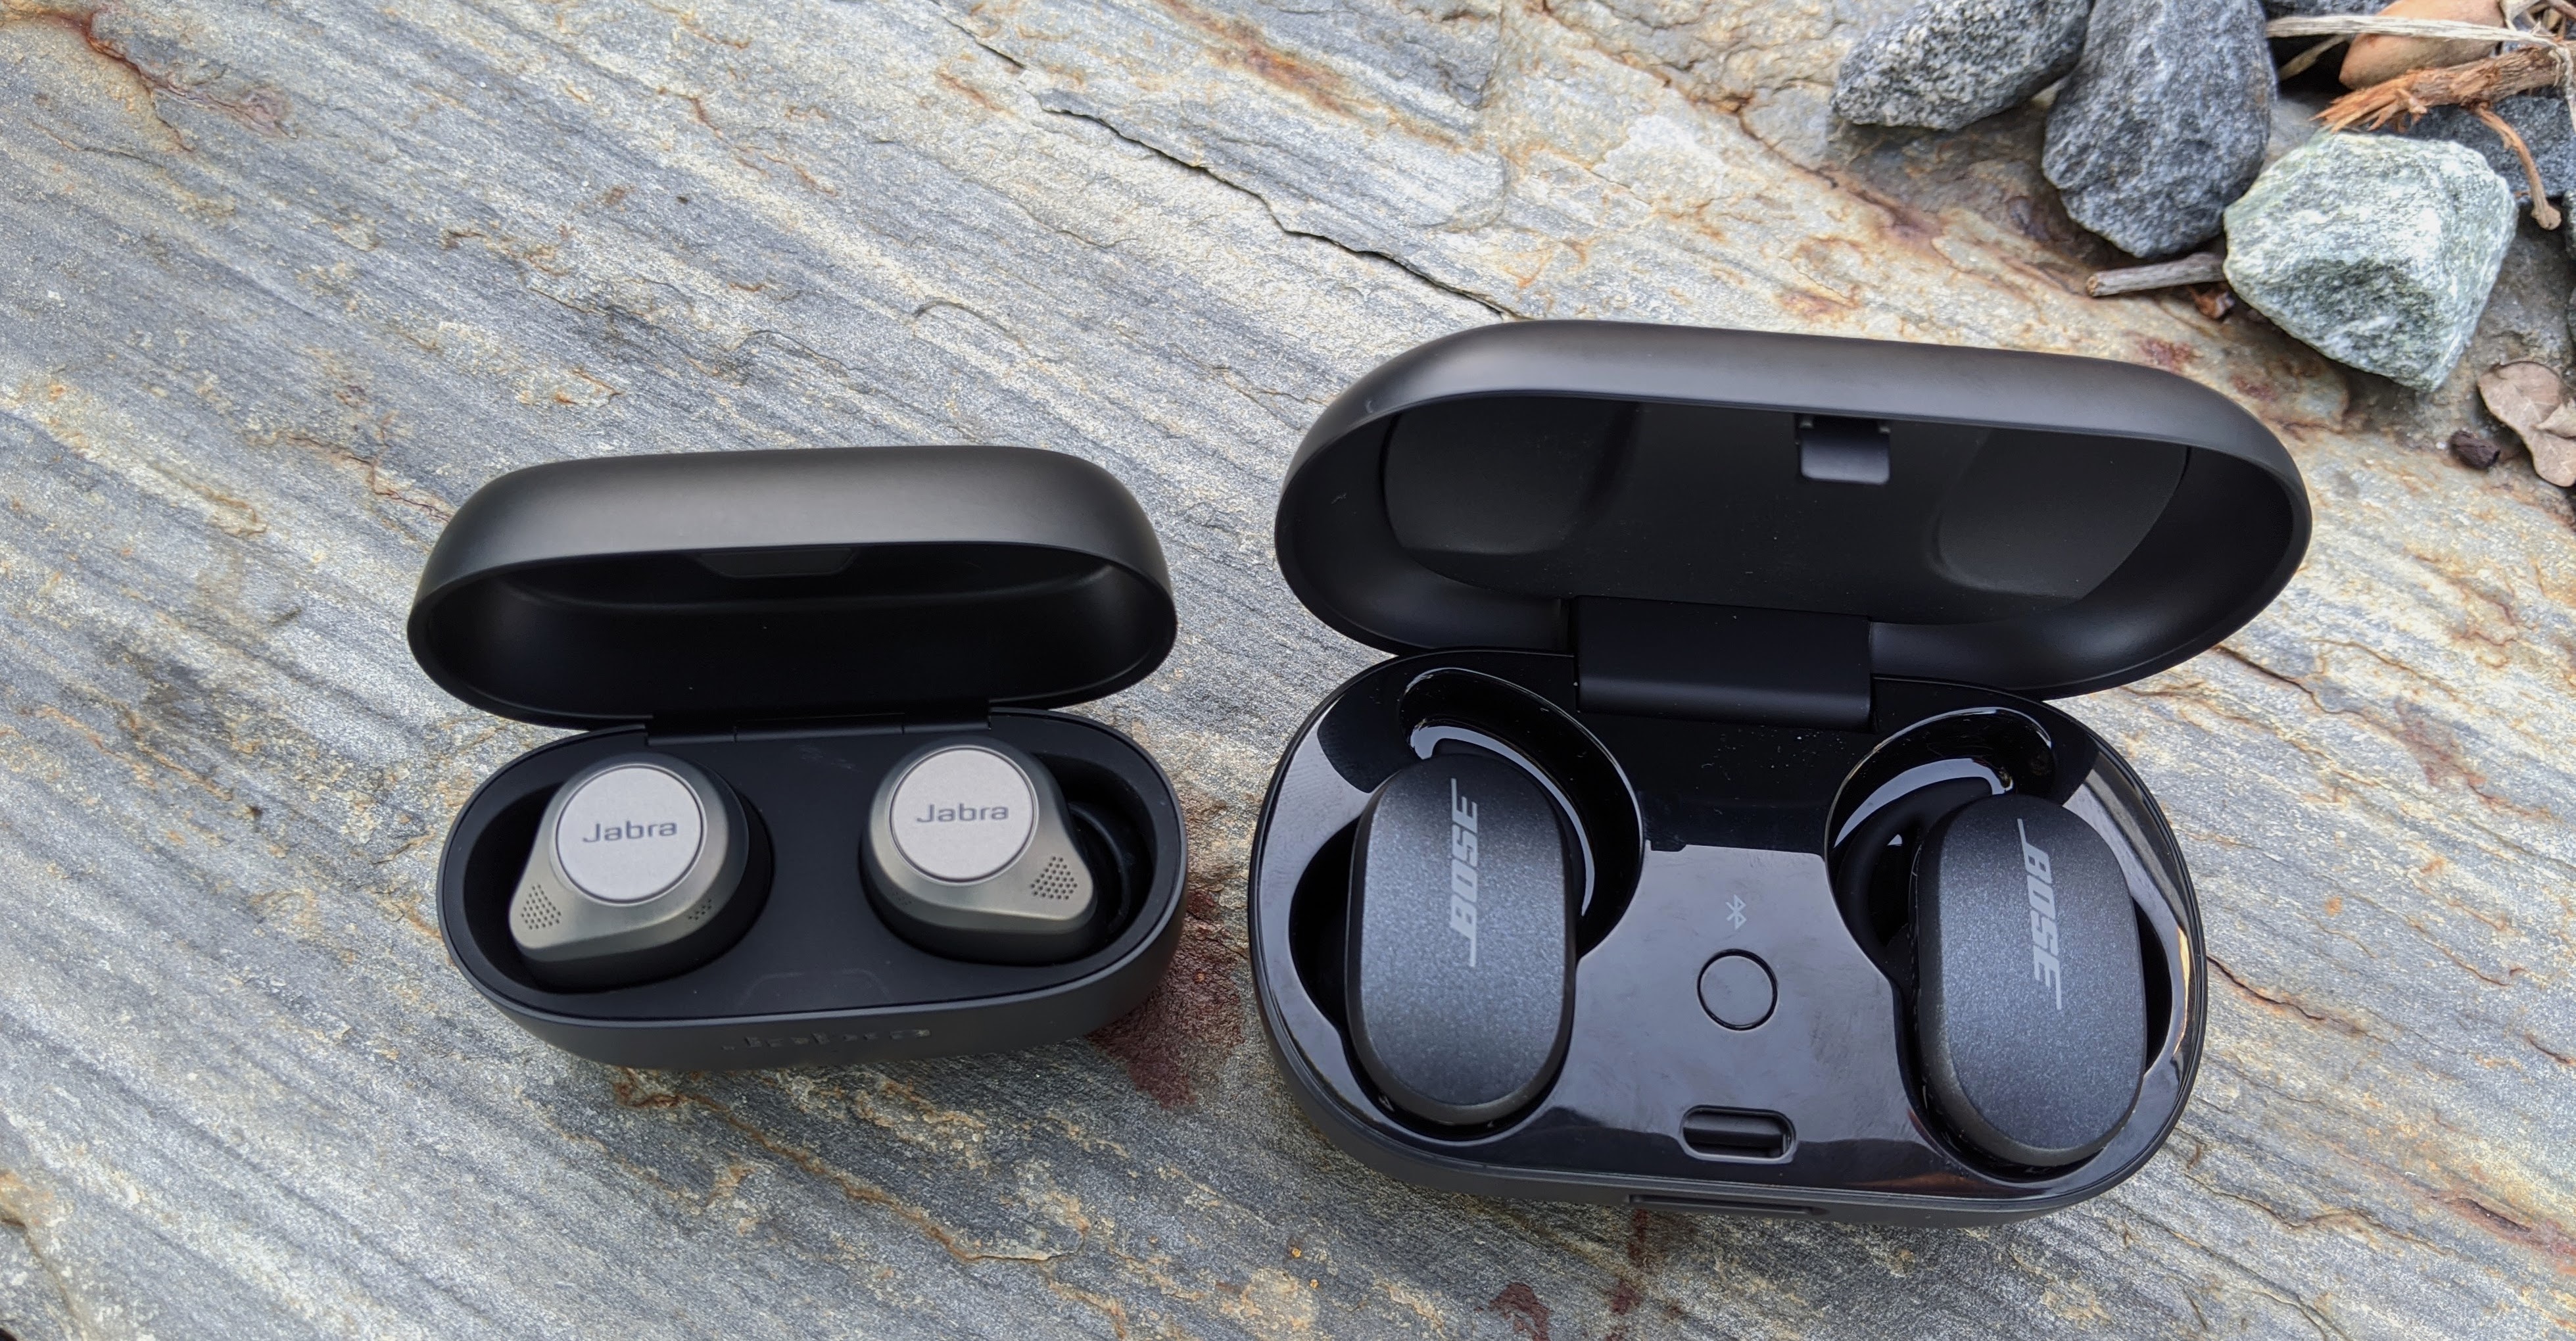 Jabra Elite 85t In-Ear Wireless Bluetooth Earbuds Headphones - Titanium  Black